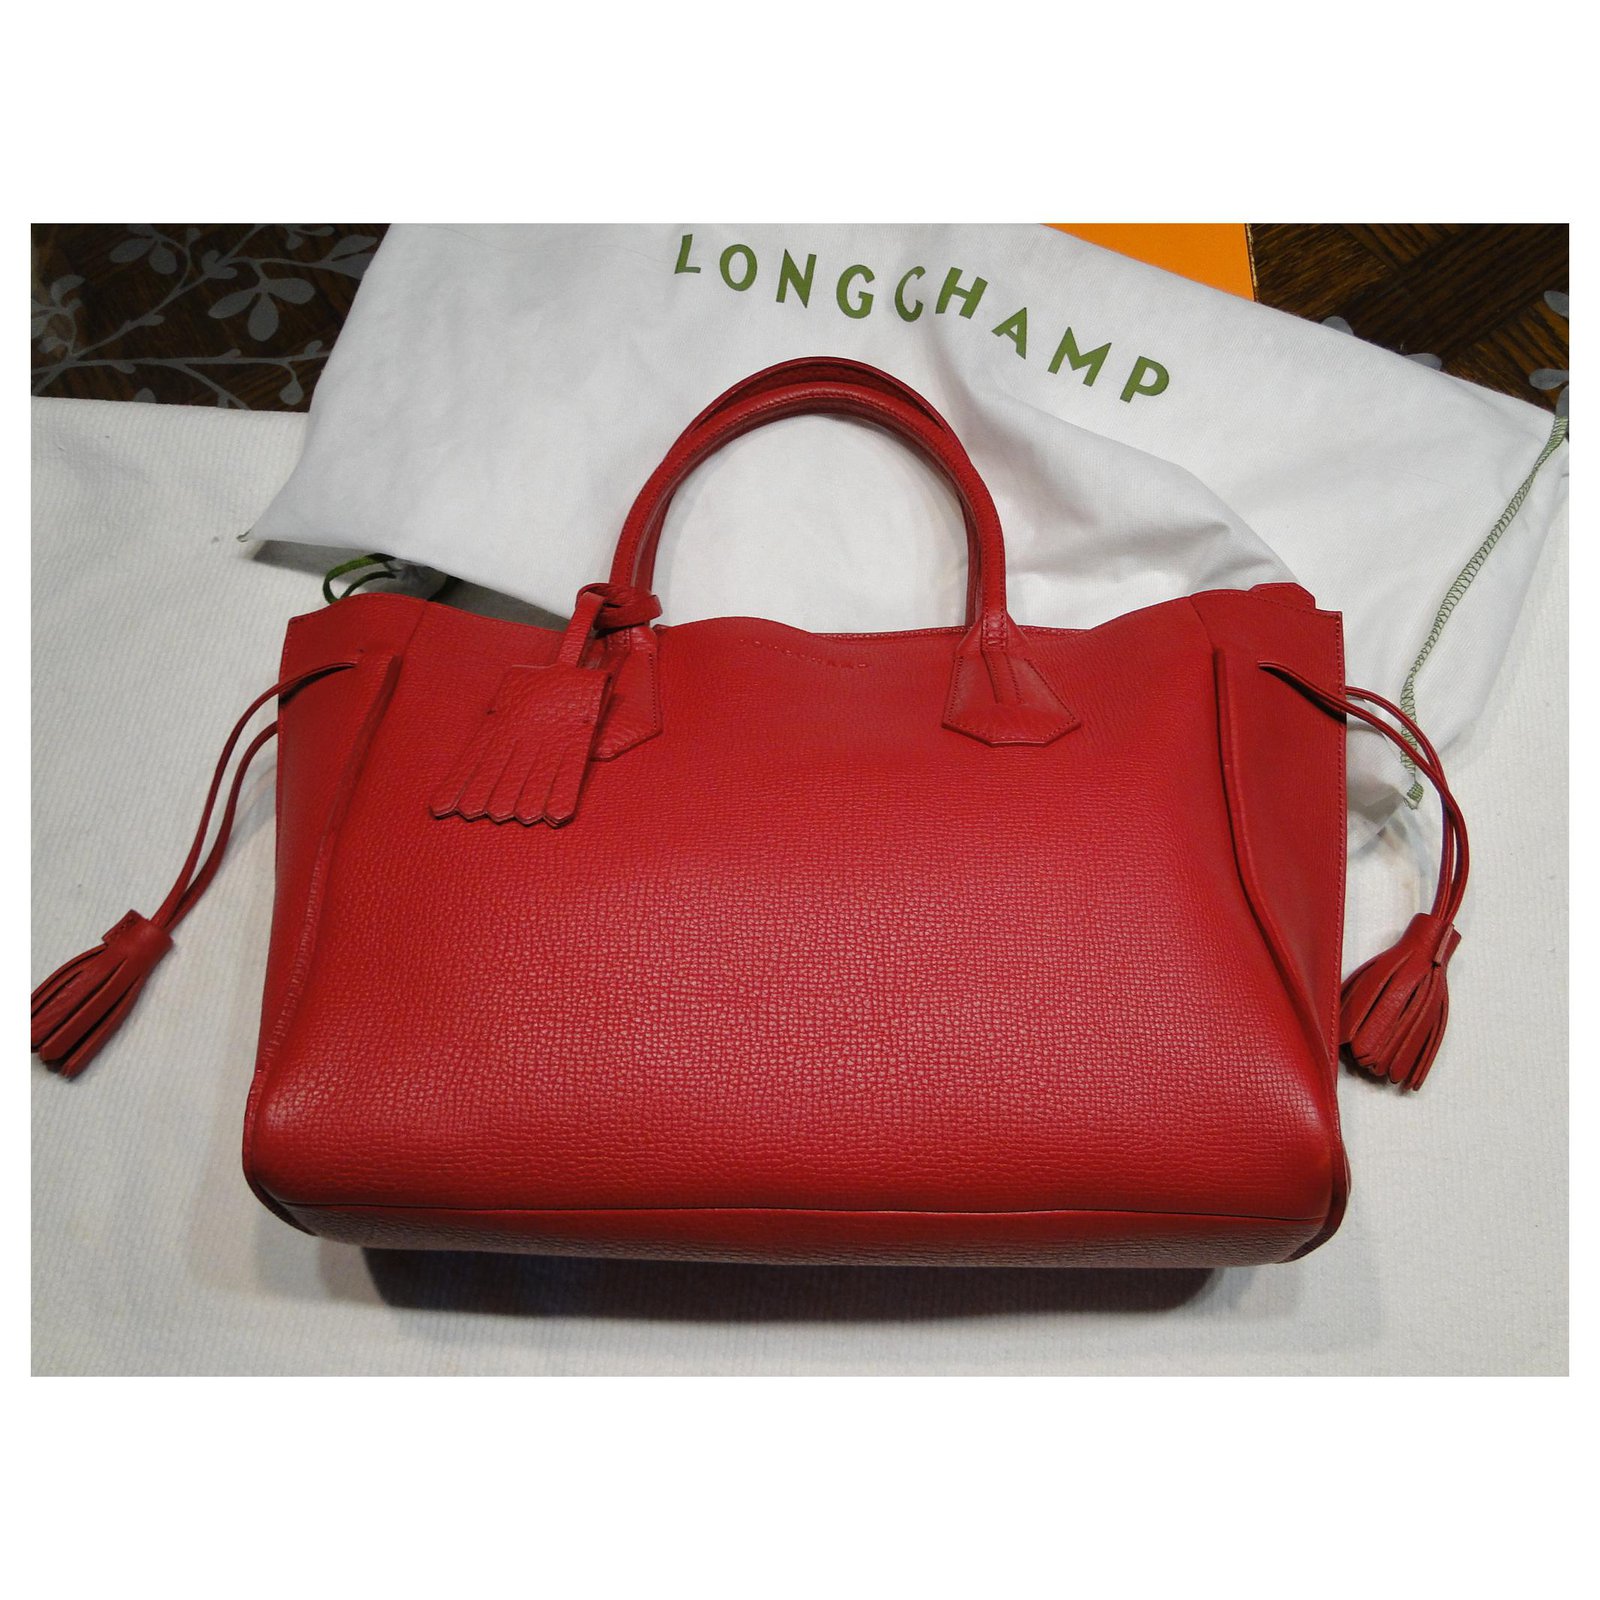 LONGCHAMP Penelope M red bag